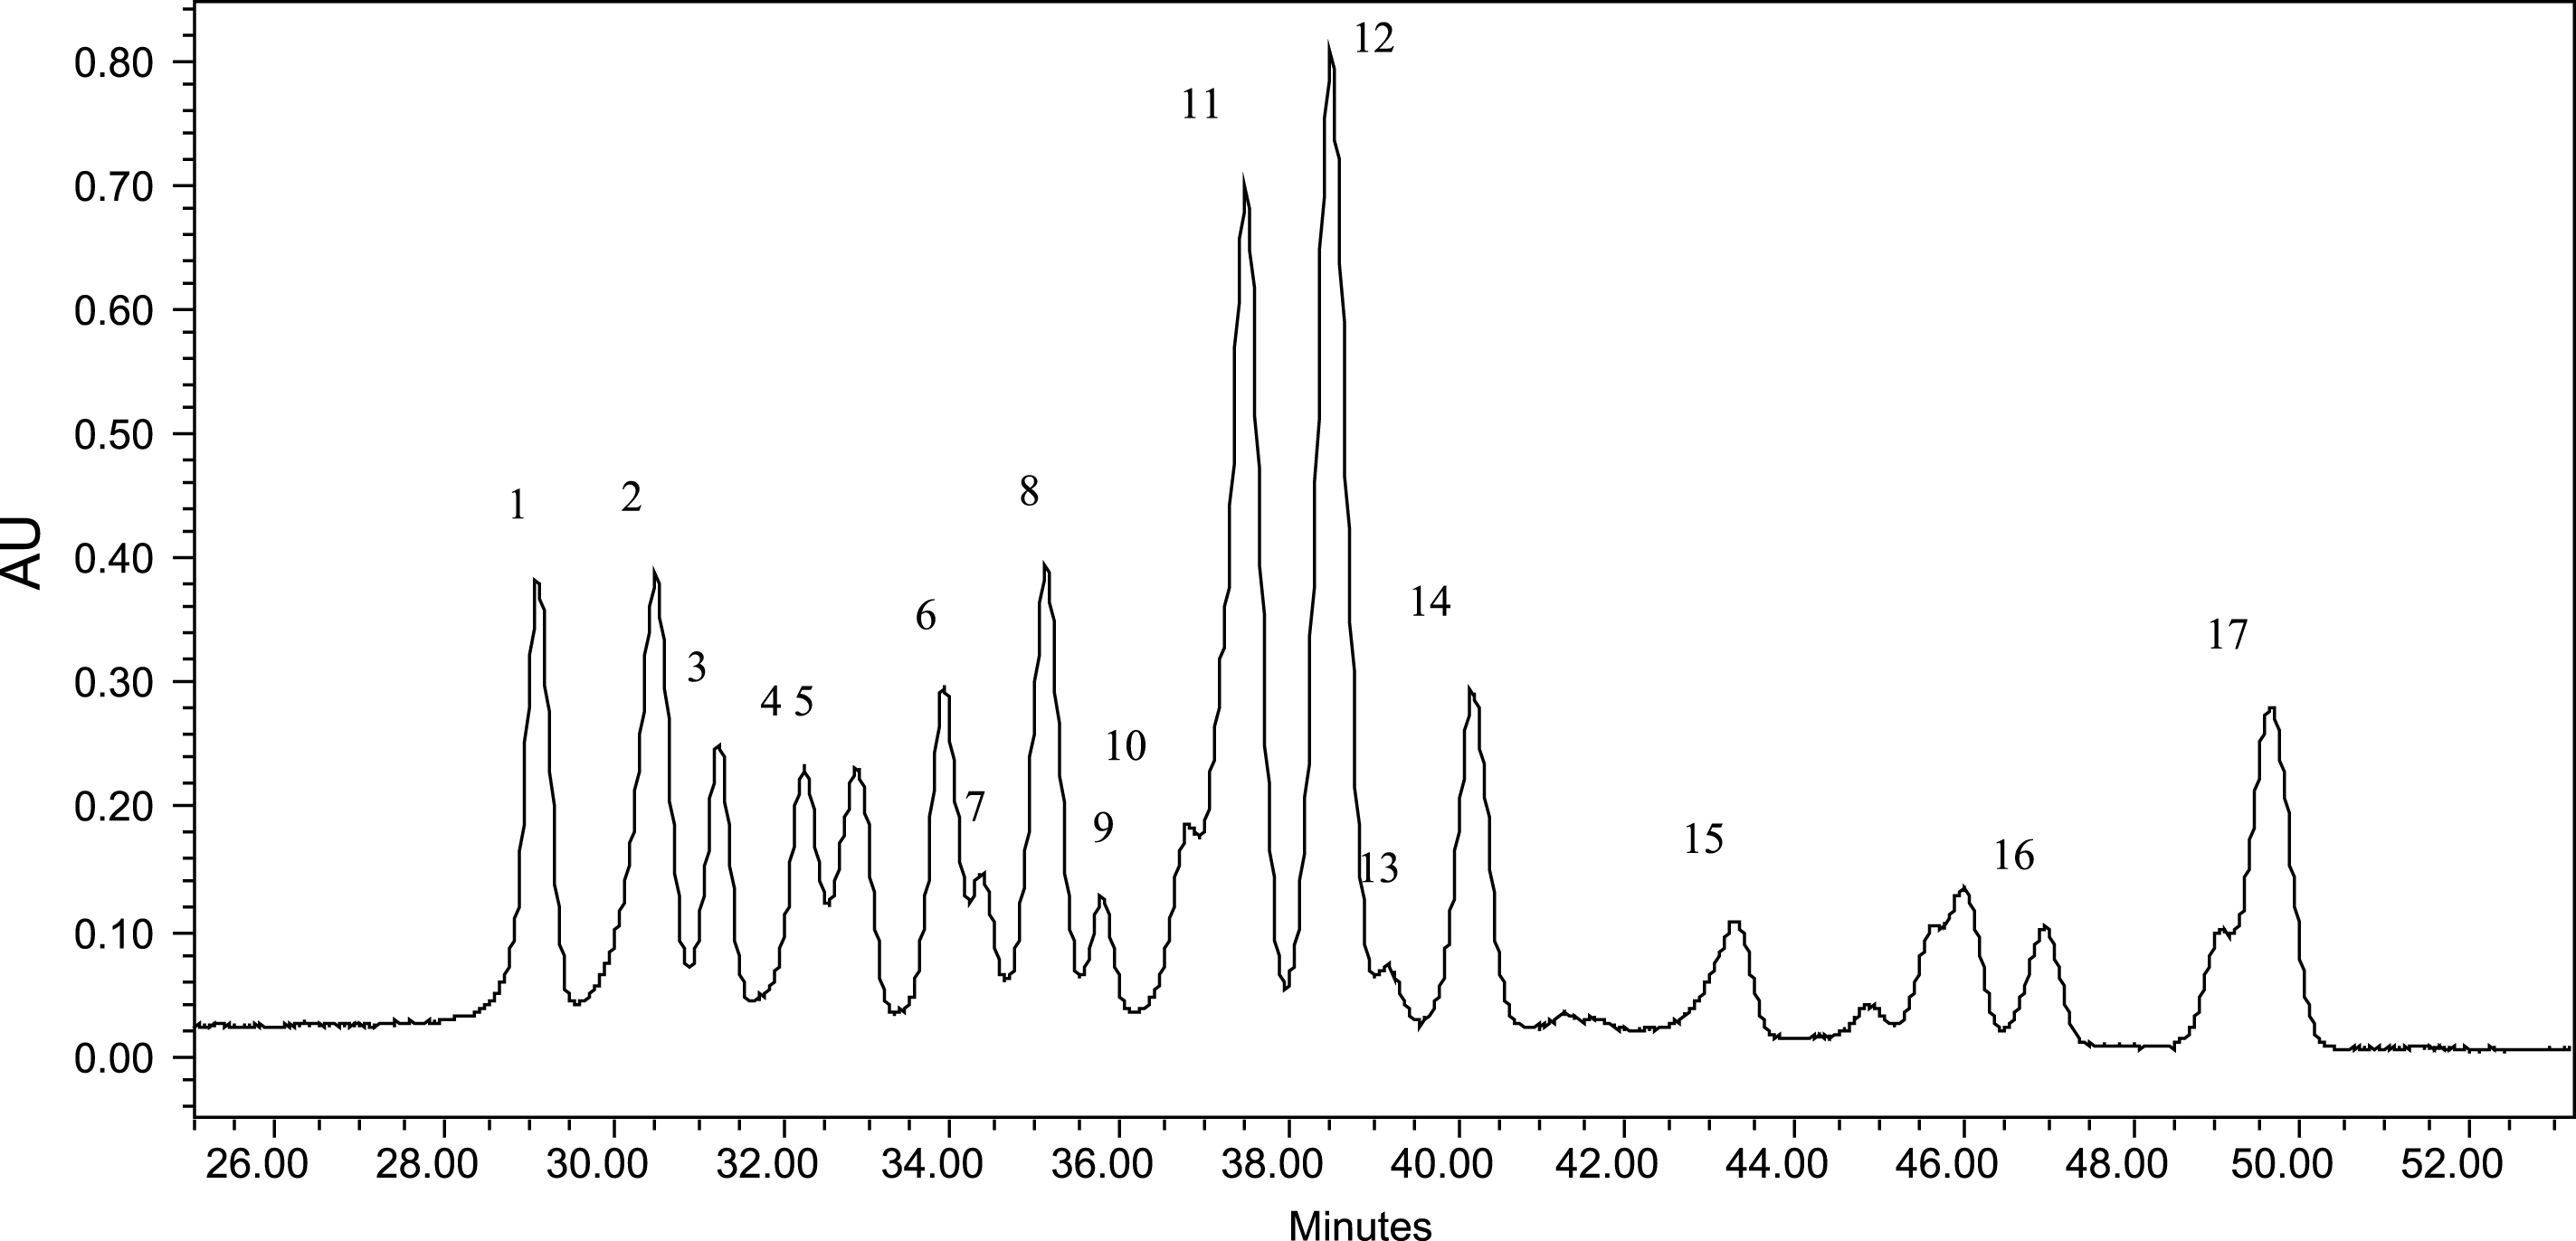 Typical HPLC chromatogram (Abs 520 nm) of blueberry juice anthocyanins. peak 1, delphinidin 3-O-galactoside (m/z 465/303); peak 2, delphinidin 3-O-glucoside (m/z 465/303); peak 3, cyanidin 3-O-galactoside (m/z 449/287); peak 4, delphinidin 3-O-arabinoside (m/z 435/303); peak 5, cyanidin 3-O-glucoside (m/z 449/287); peak 6, petunidin 3-O-galactoside (m/z 479/317); peak 7, cyanidin 3-O-arabinoside (m/z 419/287); peak 8, petunidin 3-O-glucoside (m/z 479/317); peak 9, peonidin 3-O-galactoside (m/z 463/301); peak 10, petunidin 3-O-arabinoside (m/z 449/317); peak 11, malvidin 3-O-galactoside (m/z 493/331); peak 12, malvidin 3-O-glucoside (m/z 493/331); peak 13, peonidin 3-O-arabinoside (m/z 433/301); peak 14, malvidin 3-O-arabinoside (m/z 463/331); peak 15, delphinidin 3-O-(6”-acetylglucoside) (m/z 507/303); peak 16, petunidin 3-O-(6”-acetylglucoside) (m/z 521/317); peak 17, malvidin 3-O-(6”-acetylglucoside) (m/z 535/331).